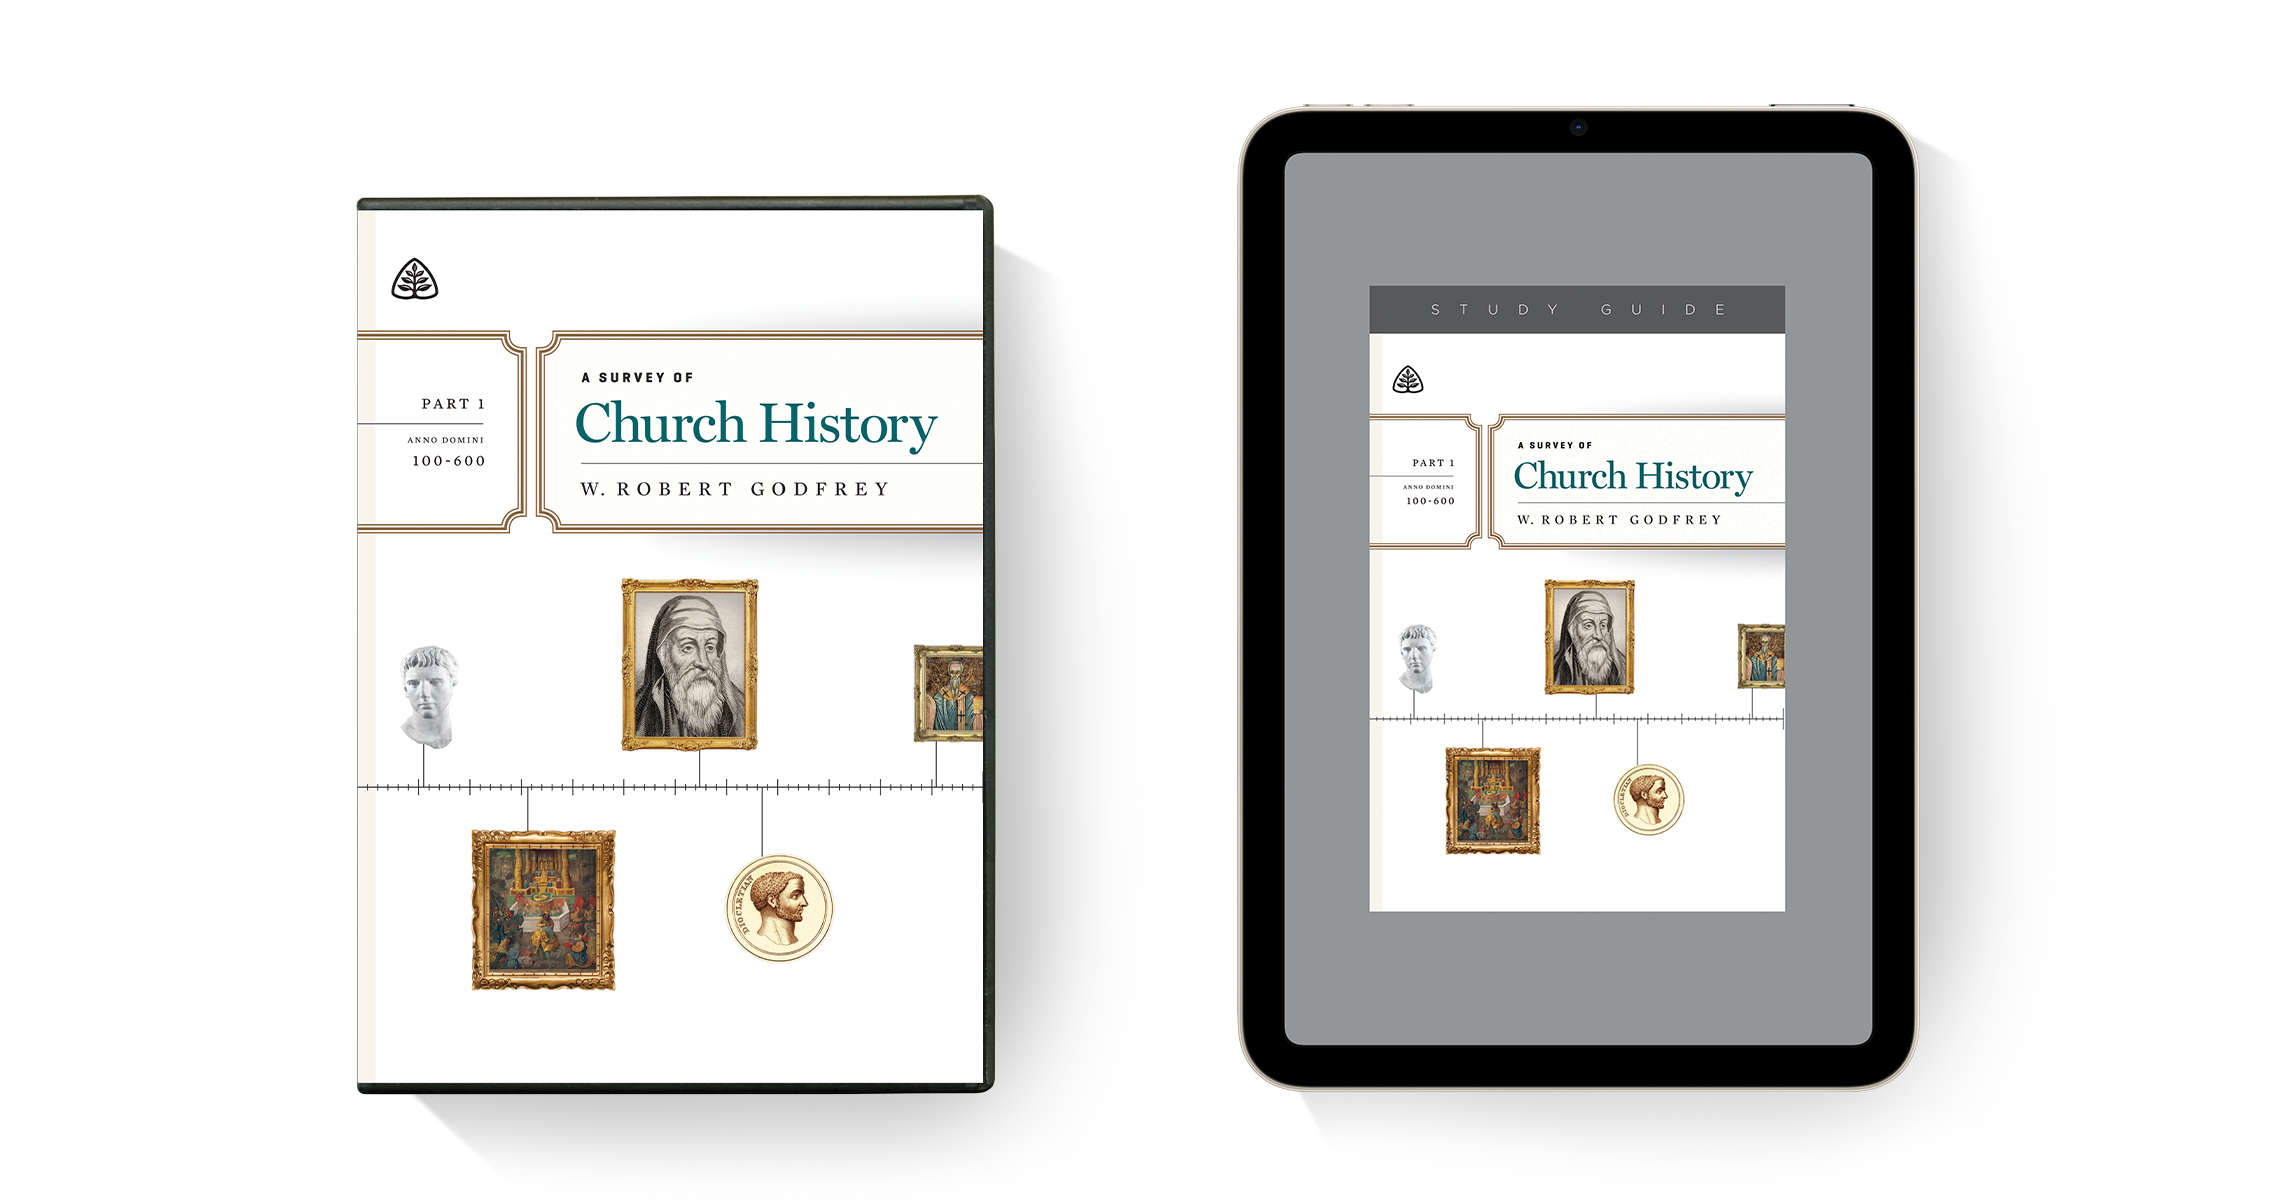 A Survey of Church History, Part 1 A.D. 100-600